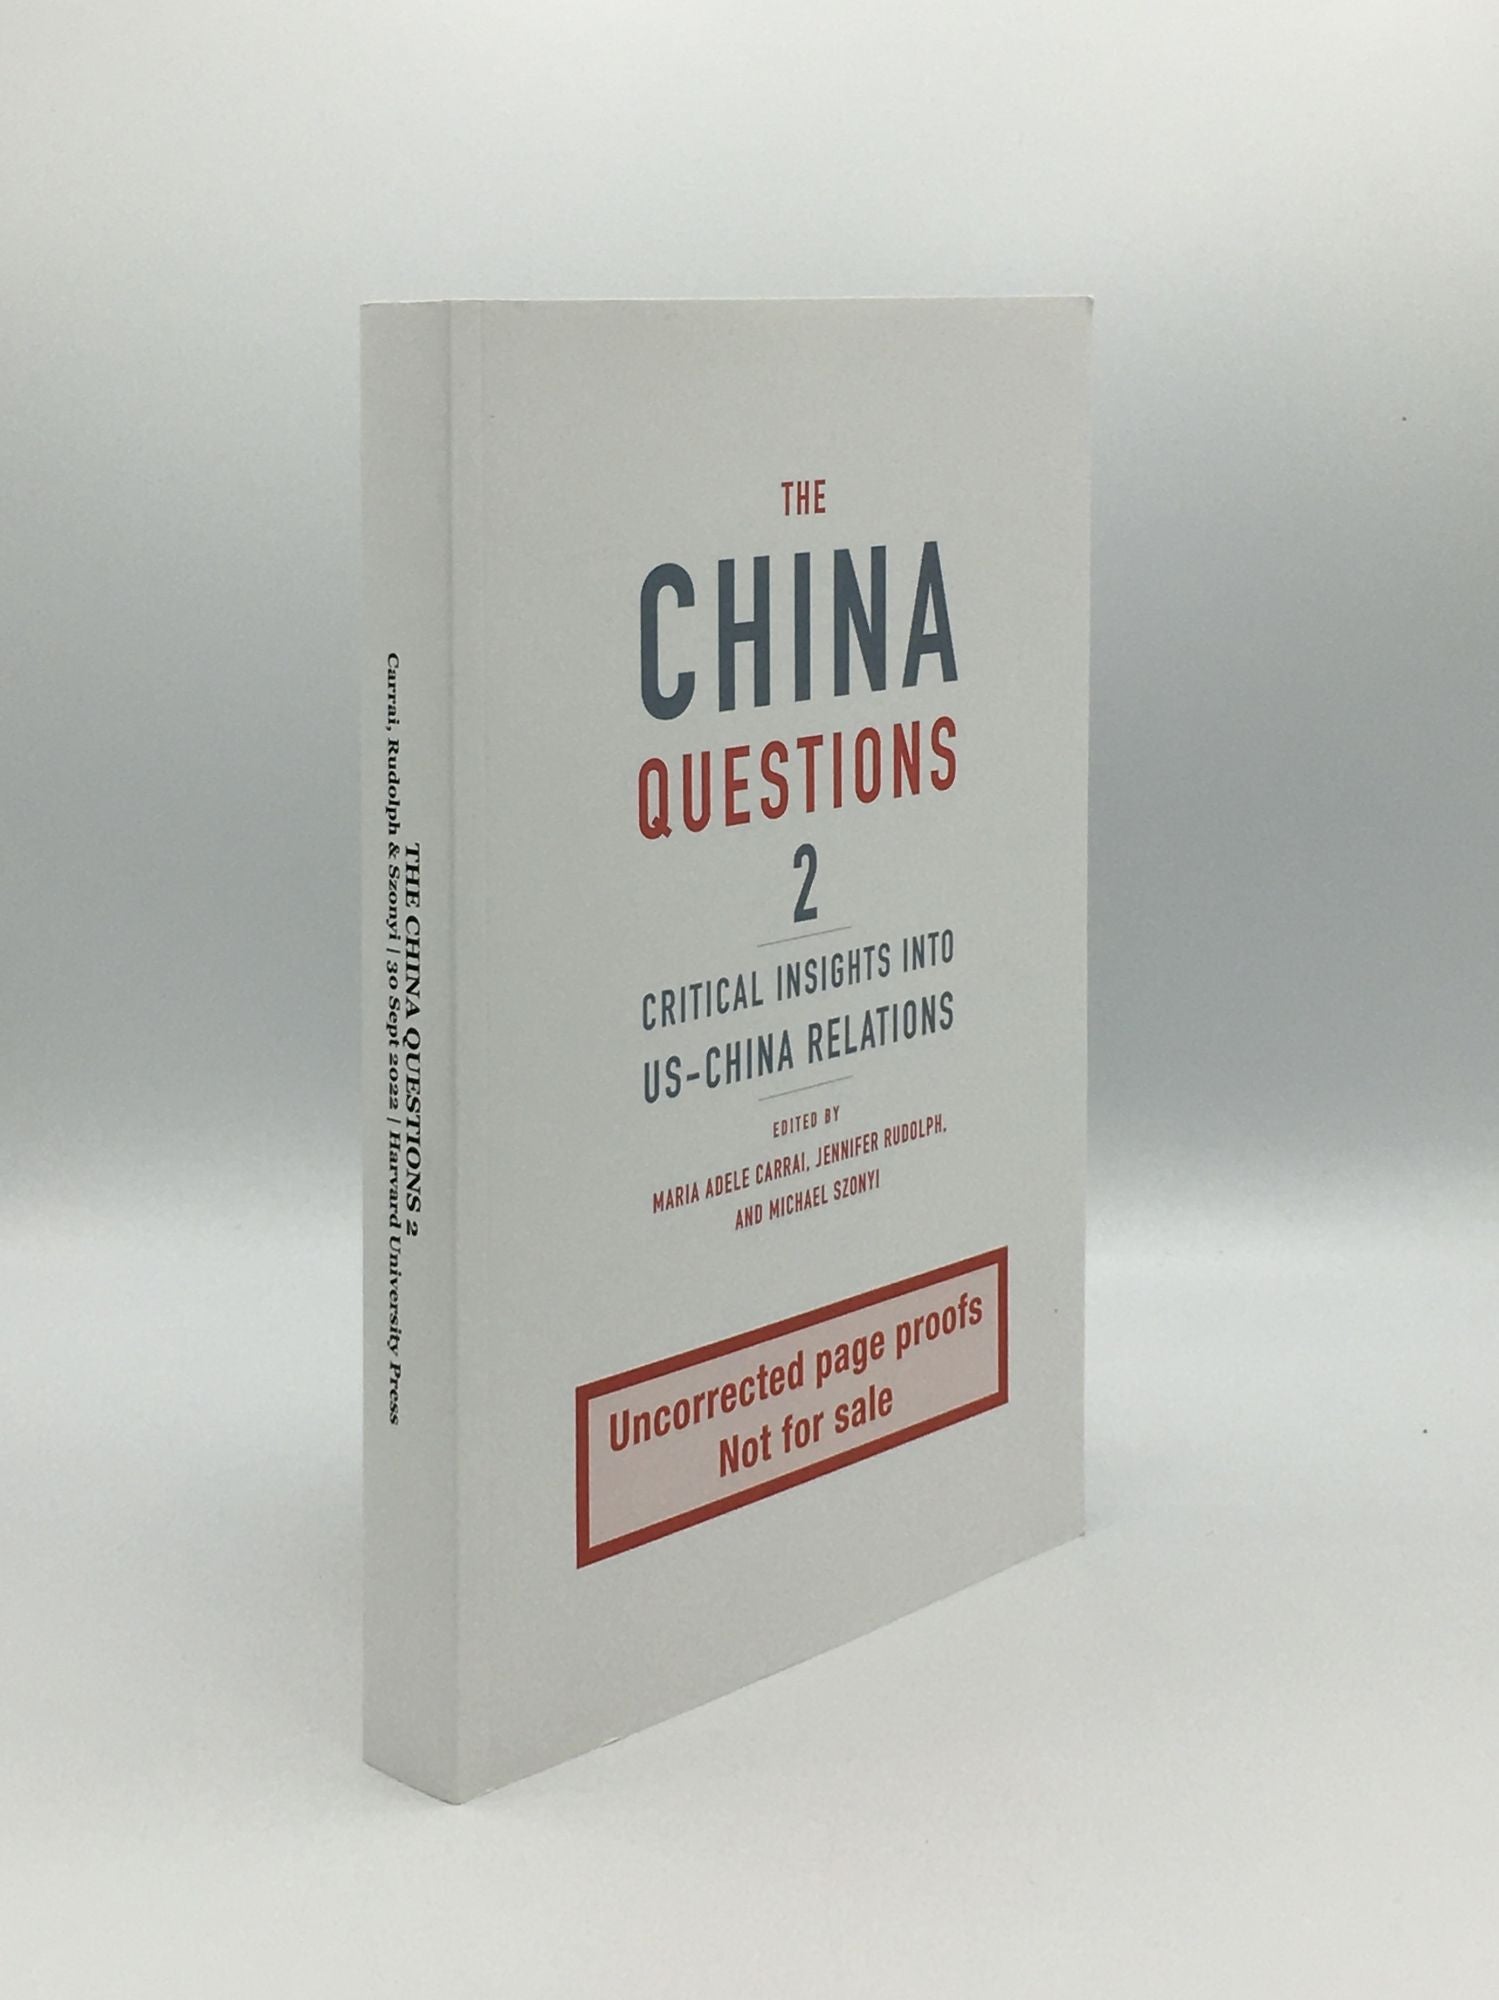 CARRAI Maria Adele, RUDOLPH Jennifer, SZONYI Michael - The China Questions 2 Critical Insights Into Us-China Relations